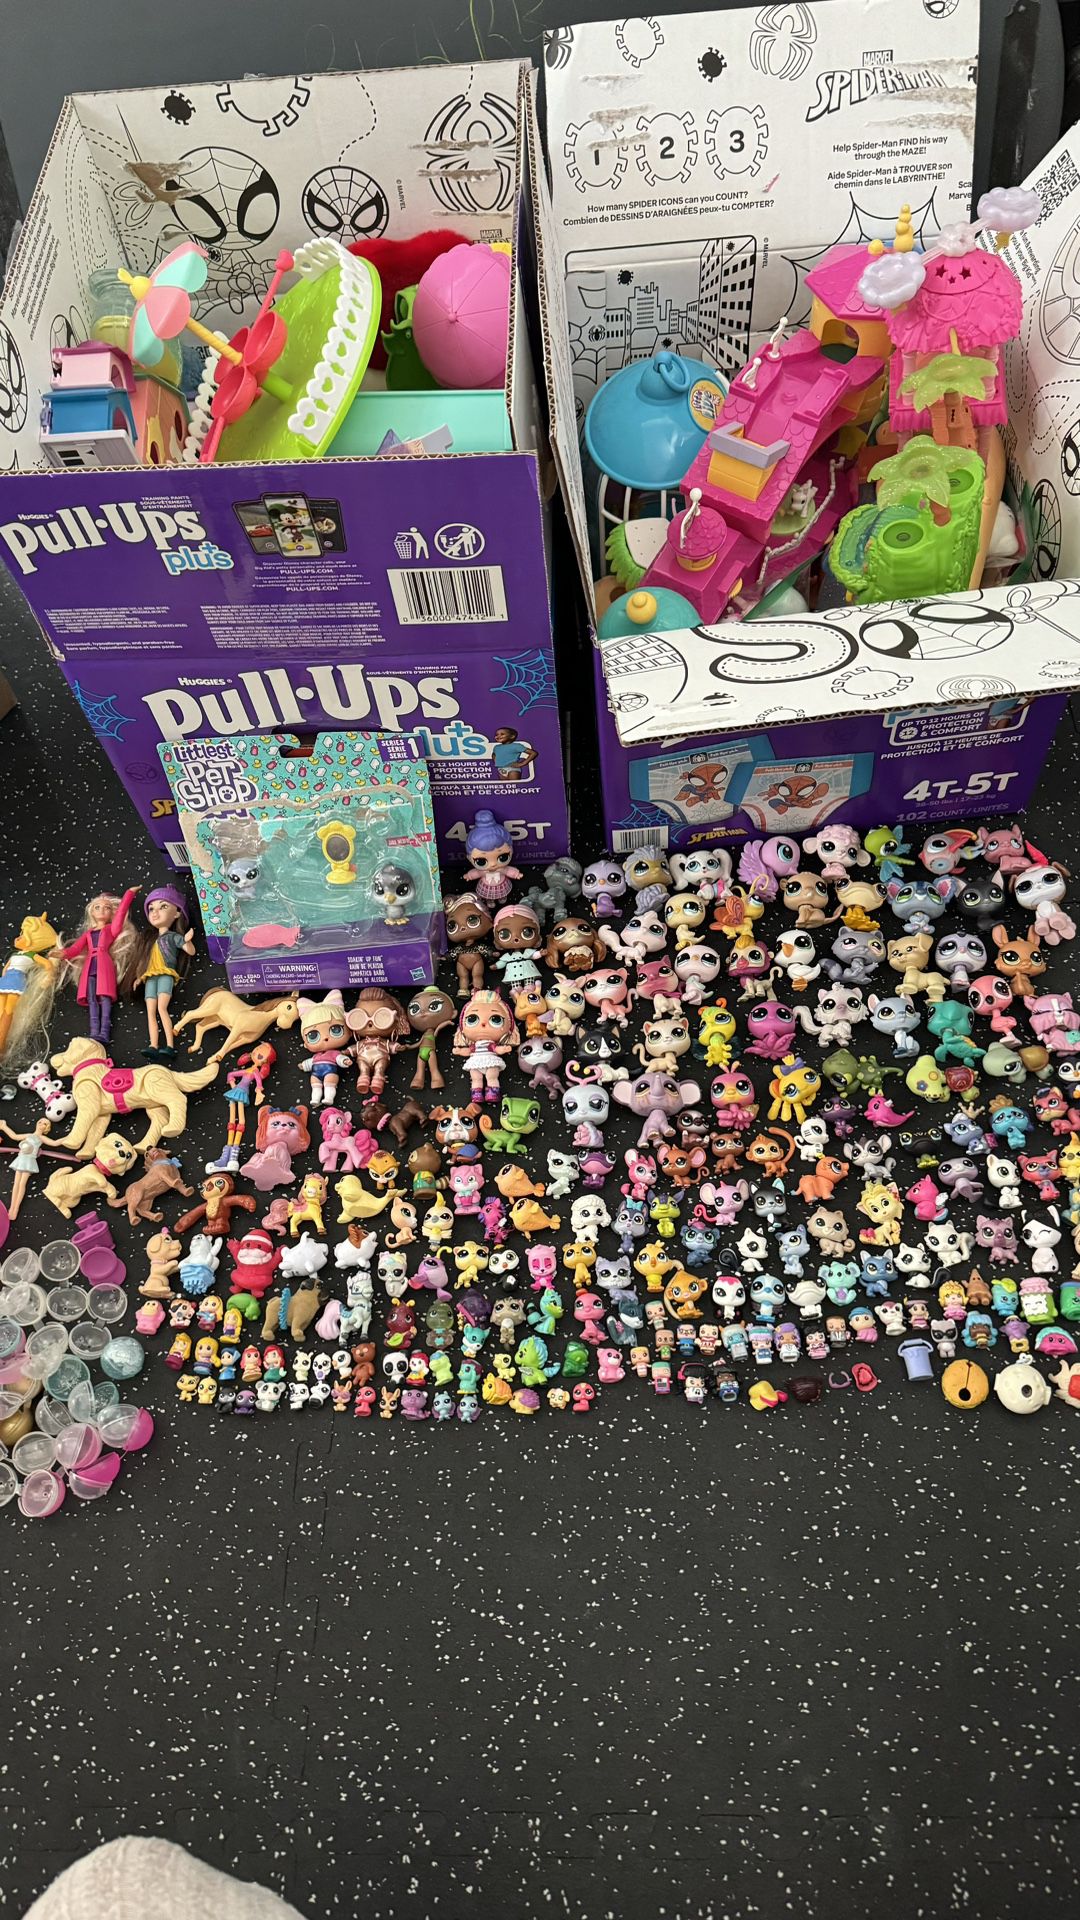 Little Girl Toy Lot - Hundreds Of Items